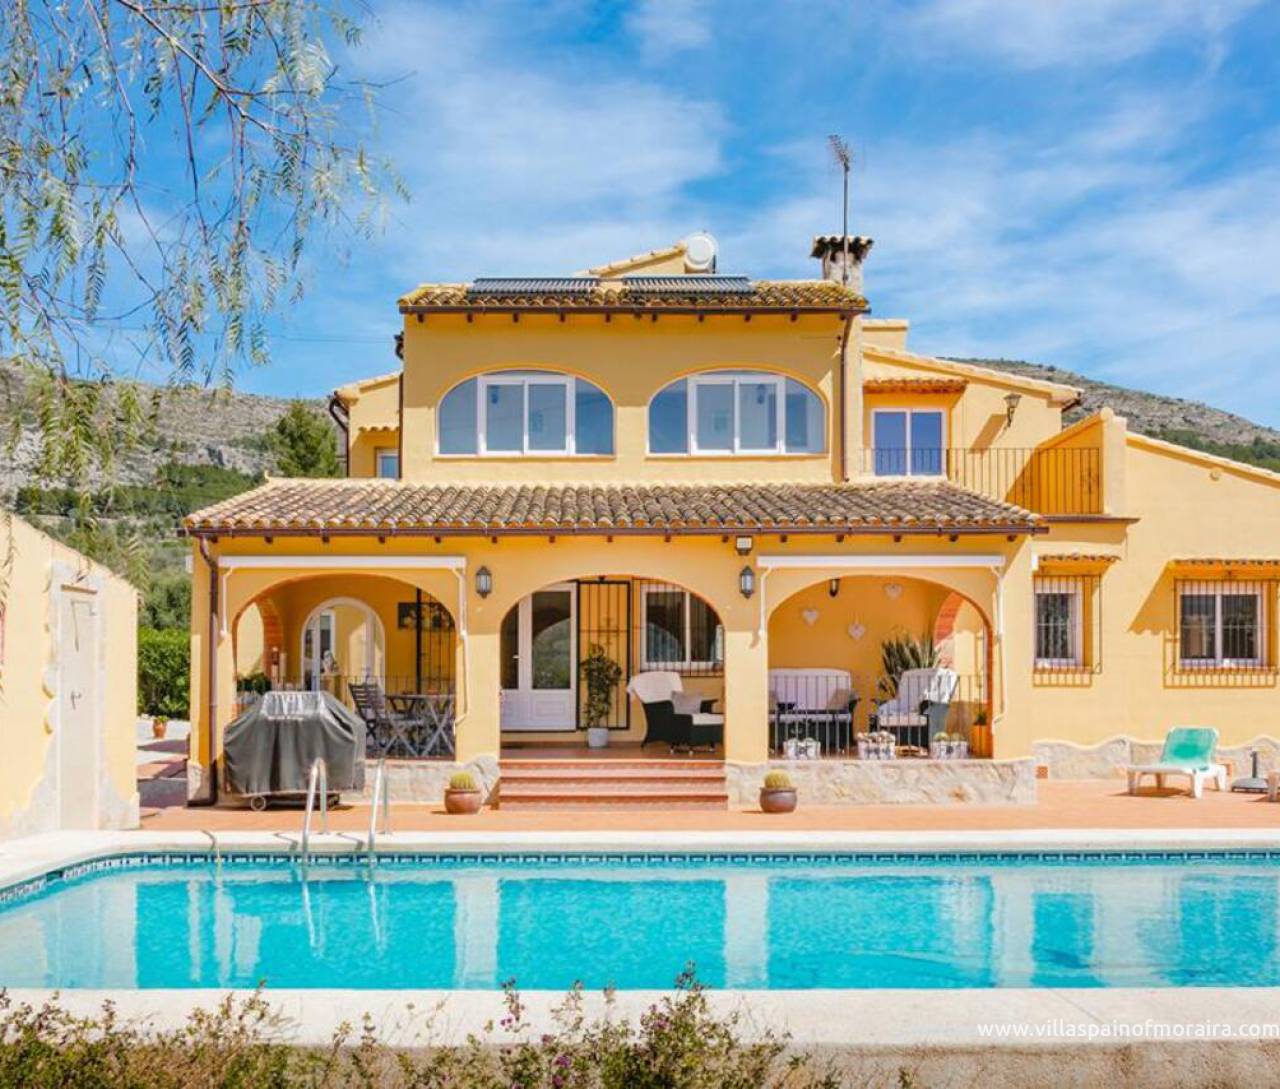 Jalon valley villa for sale